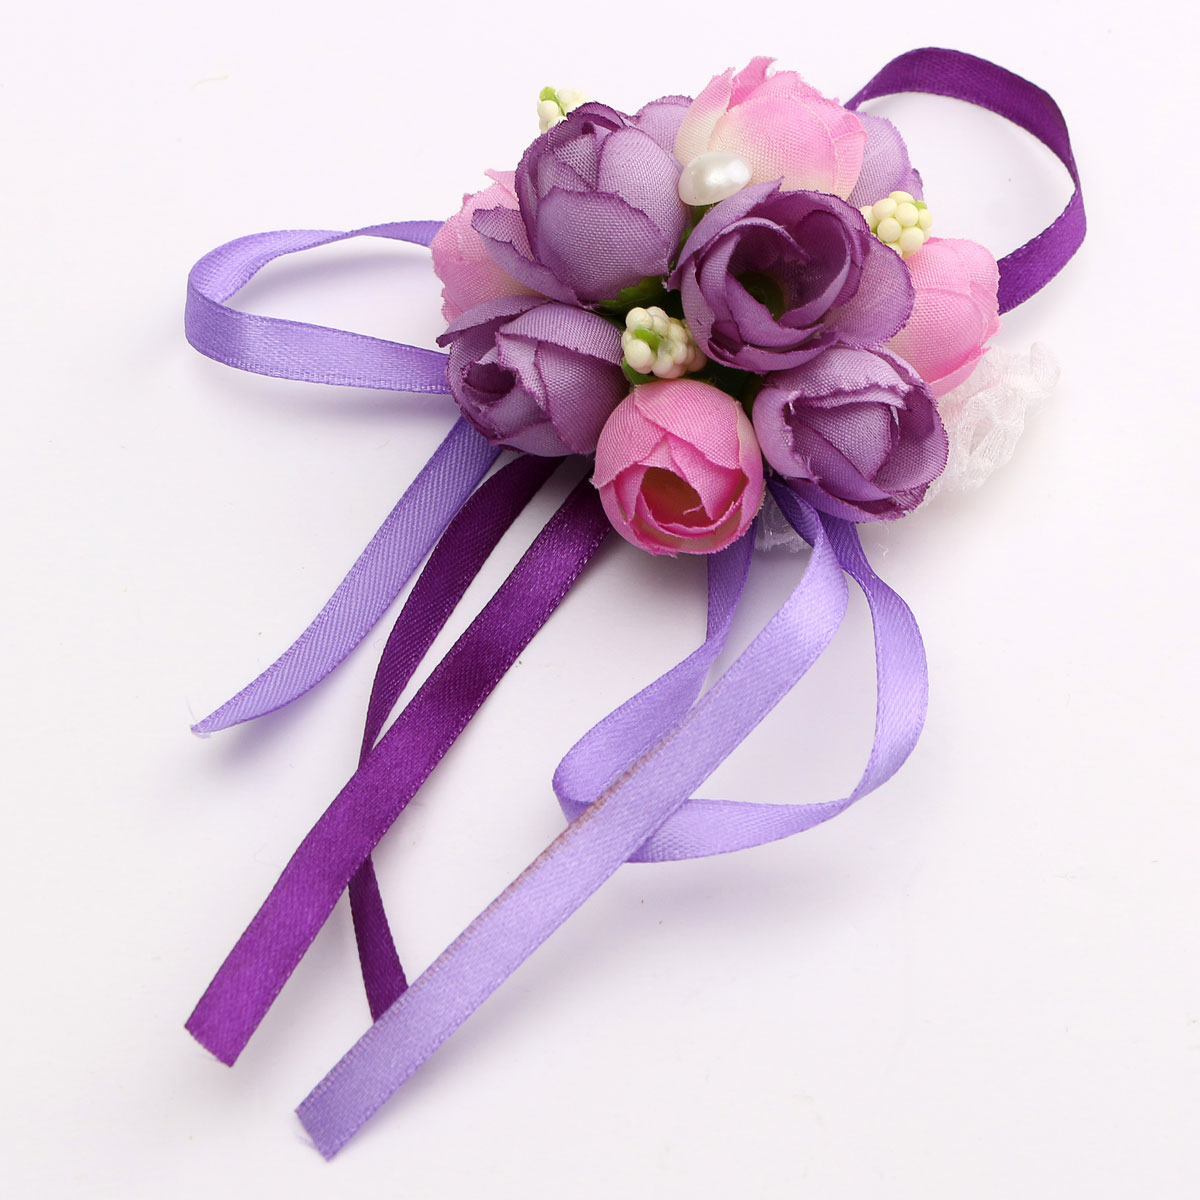 Bride-Rose-Buds-Wrist-Corsage-WeddingampParty-Decoration-Prom-Artificial-Flower-Bracelet-1018667